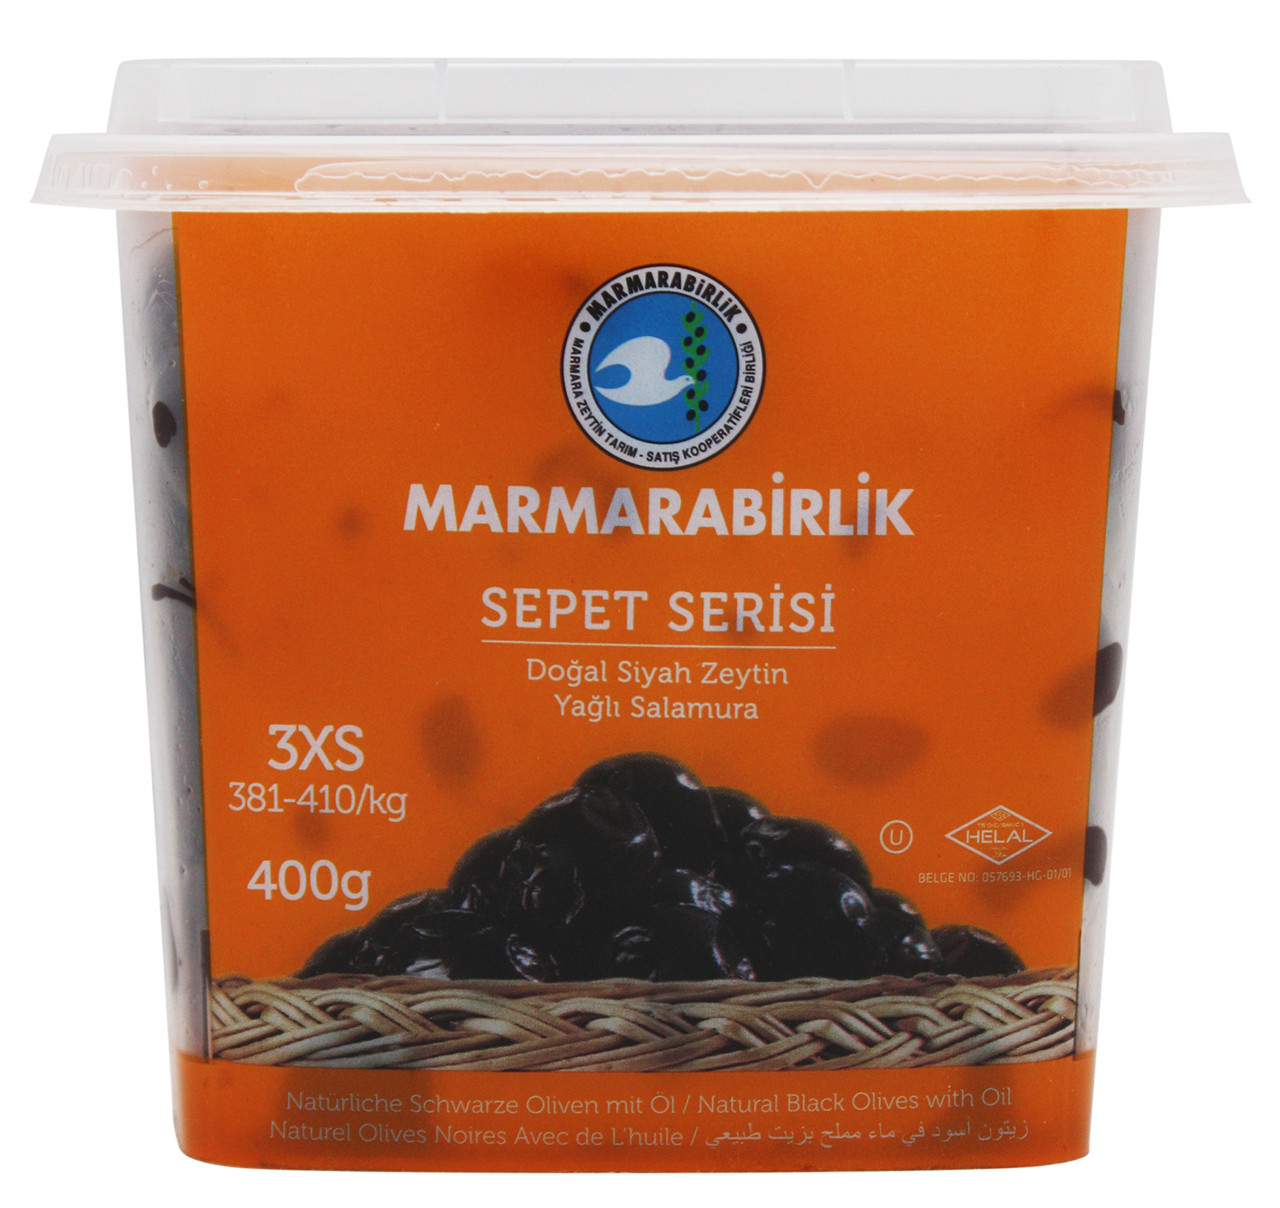 Маслины Marmarabirlik sepet serisi вяленые 3XS, 400 гр.(Турция)